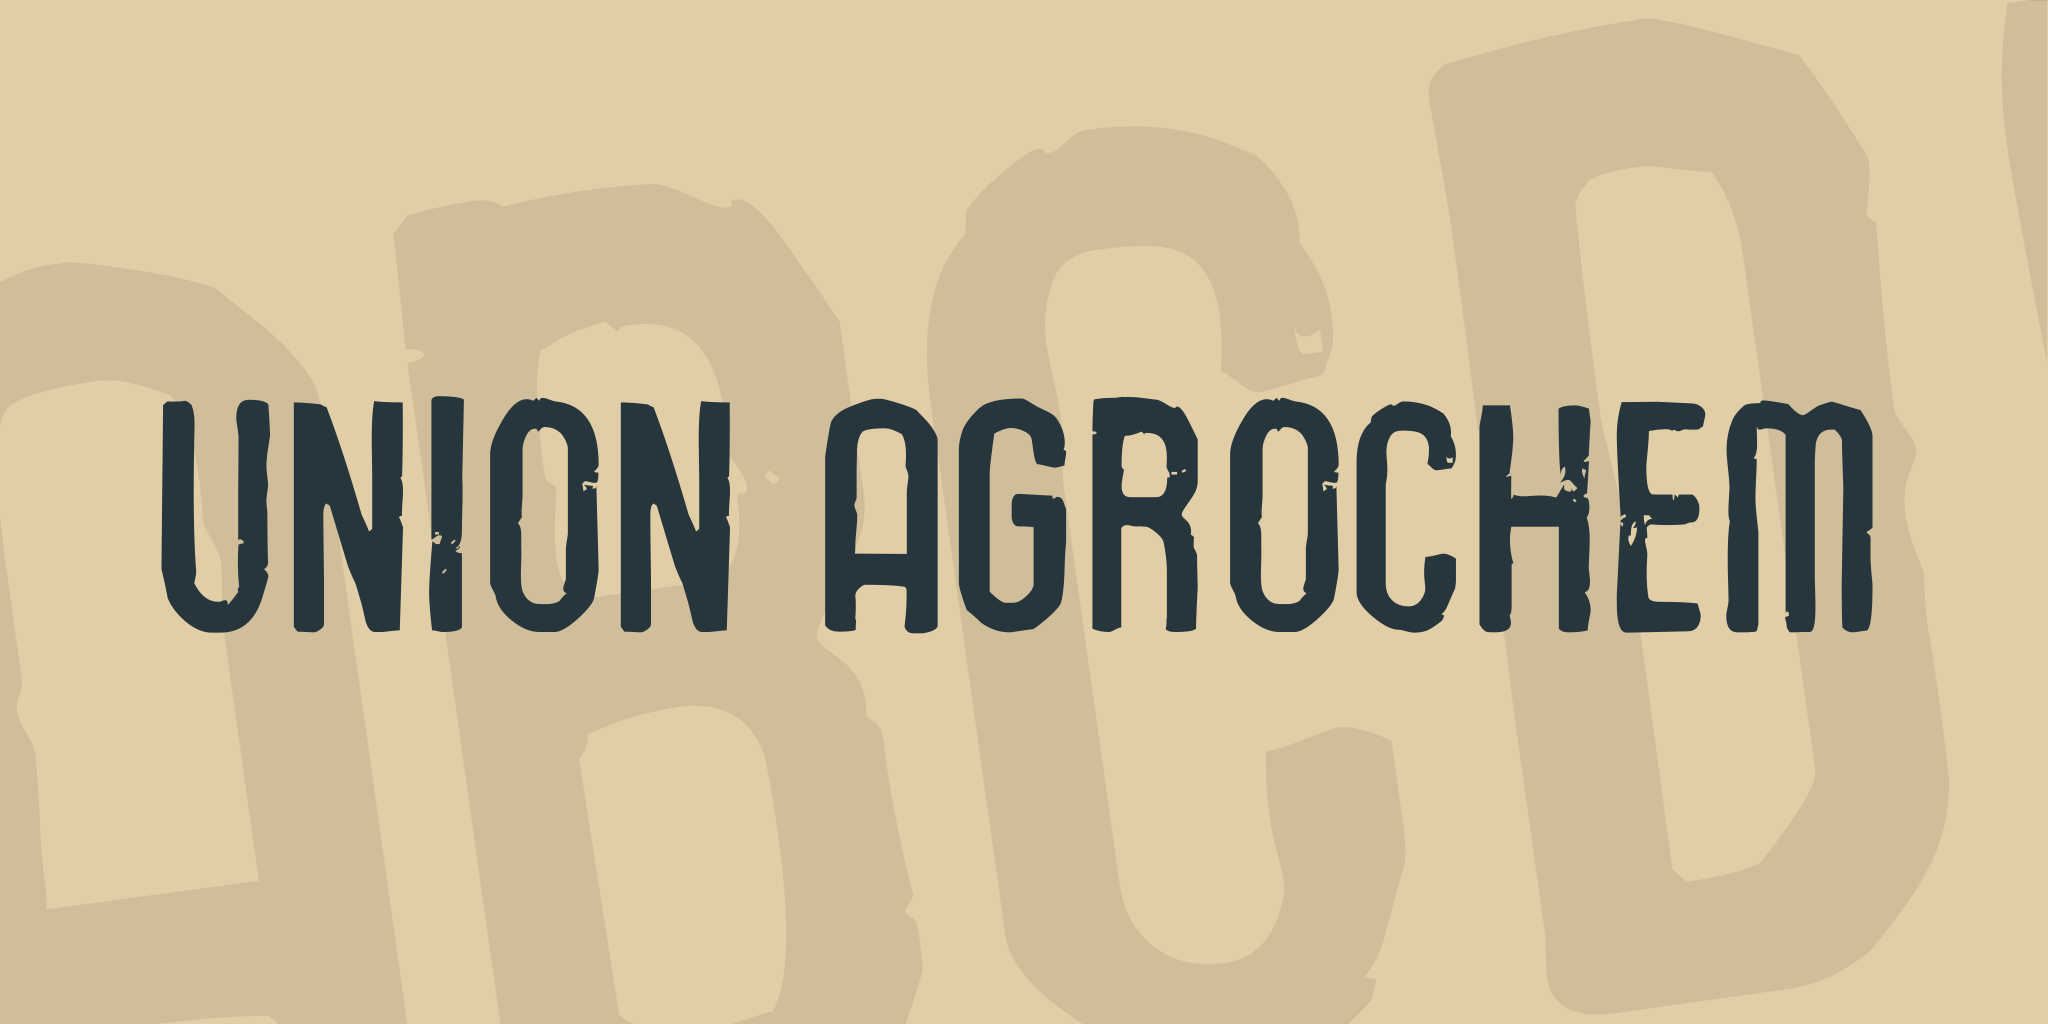 Union Agrochem